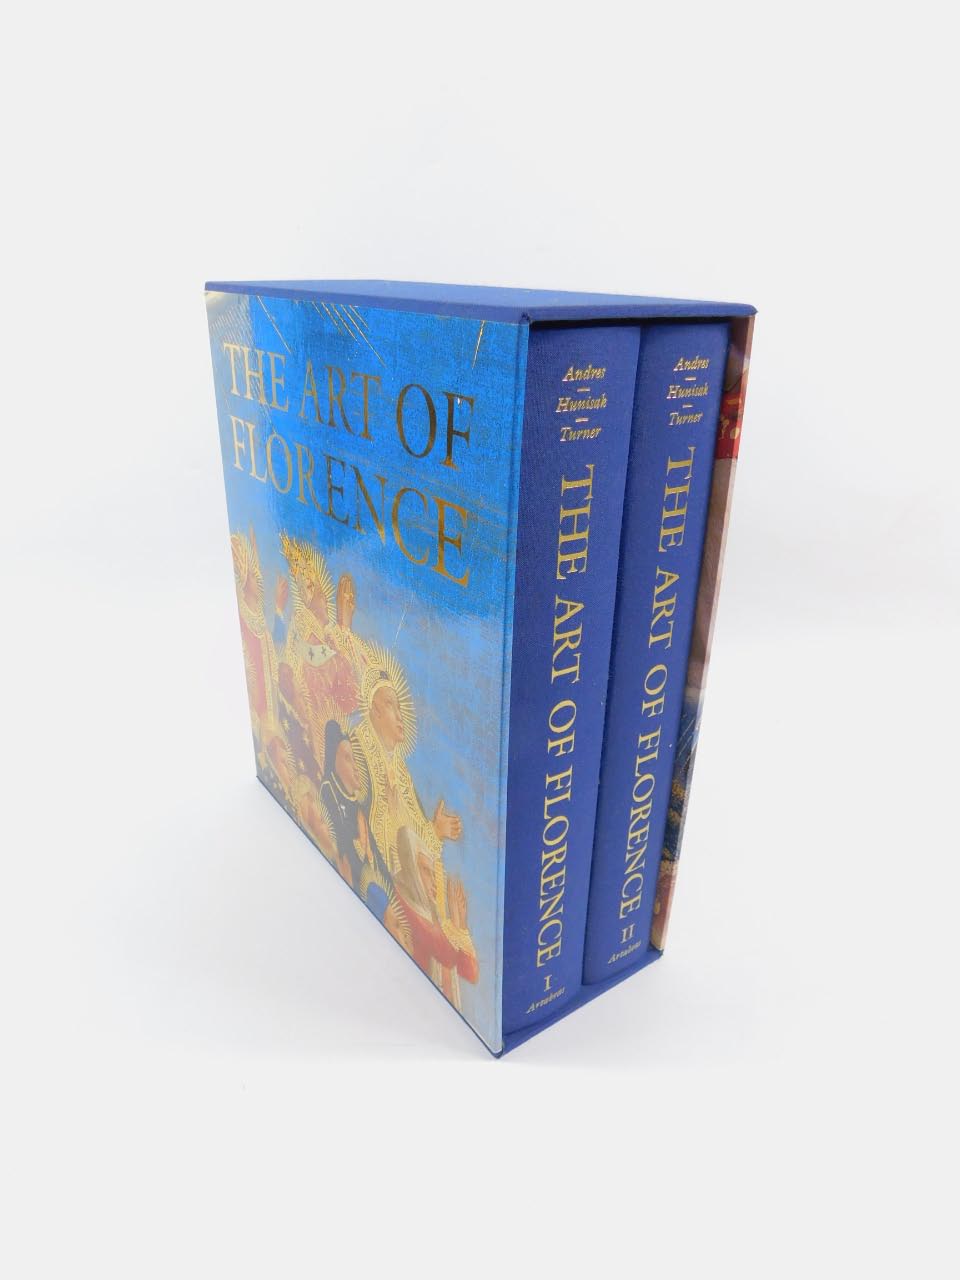 Glenn M Andres et al. The Art of Florence, 2 vols, blue cloth, photographs by Takashi Okamura,